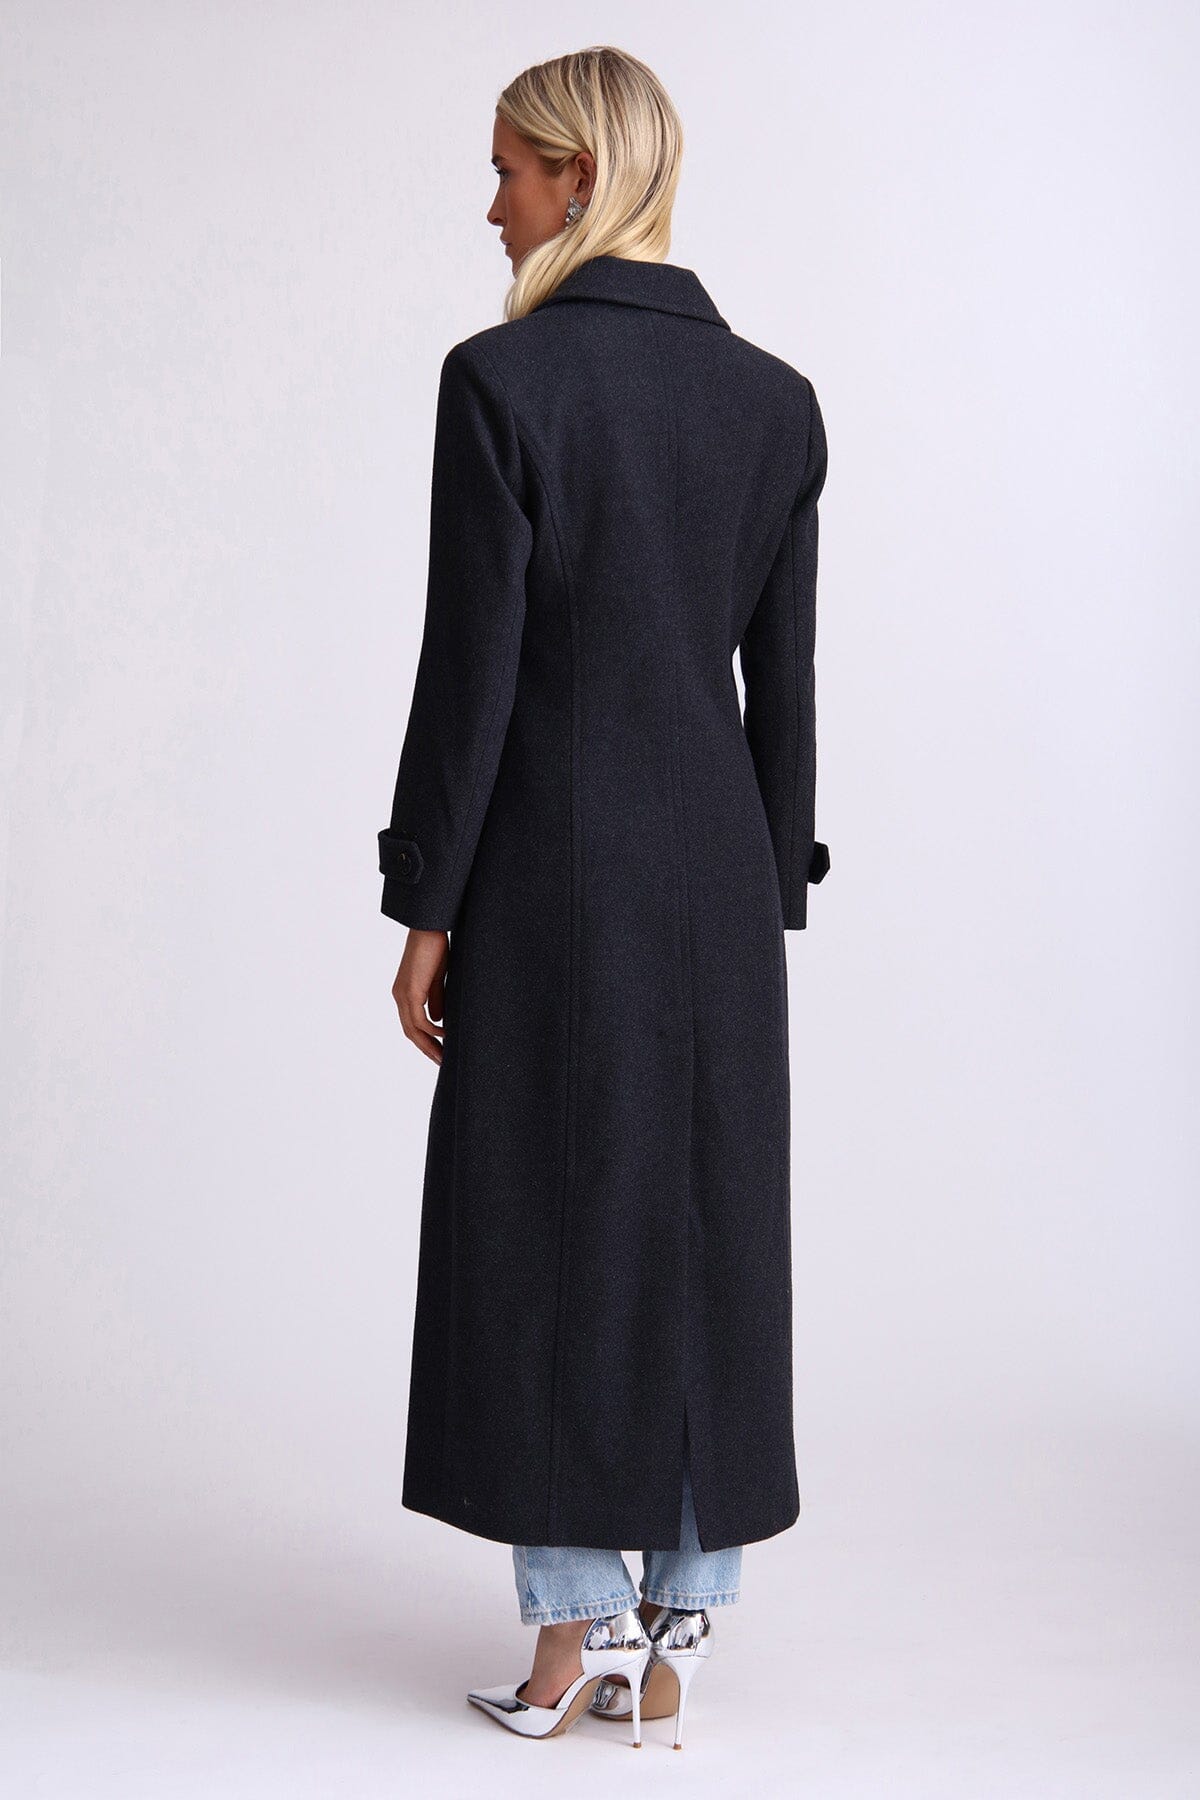 Black strong shoulder tailored wool blend long coat - figure flattering dressy date night coats jackets for ladies